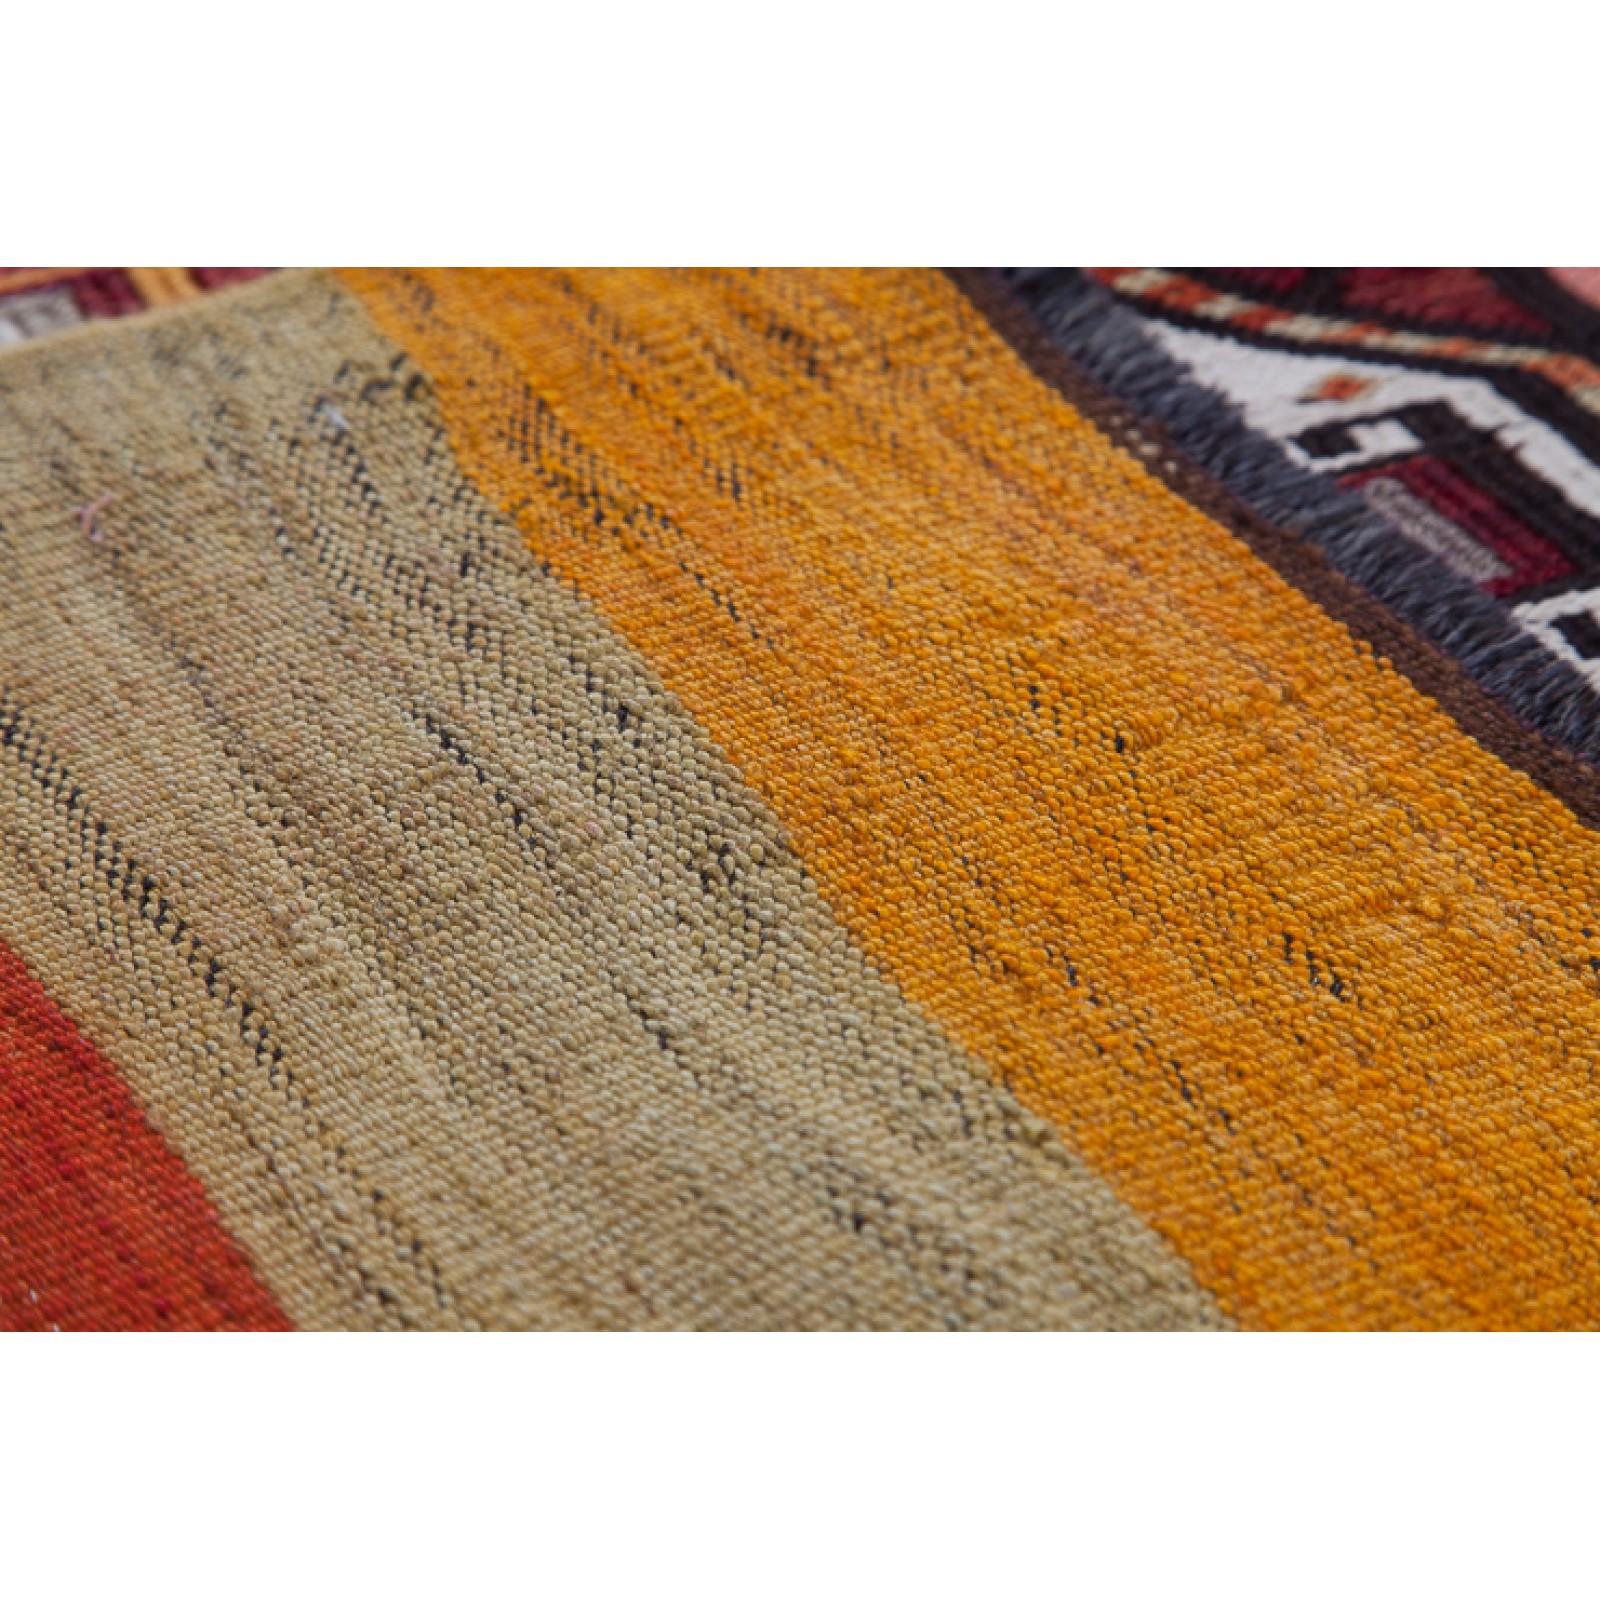 Hand-Woven Vintage Malatya Kilim Cuval Rug Wool Goat Hair Chuval Anatolian Turkish Carpet For Sale